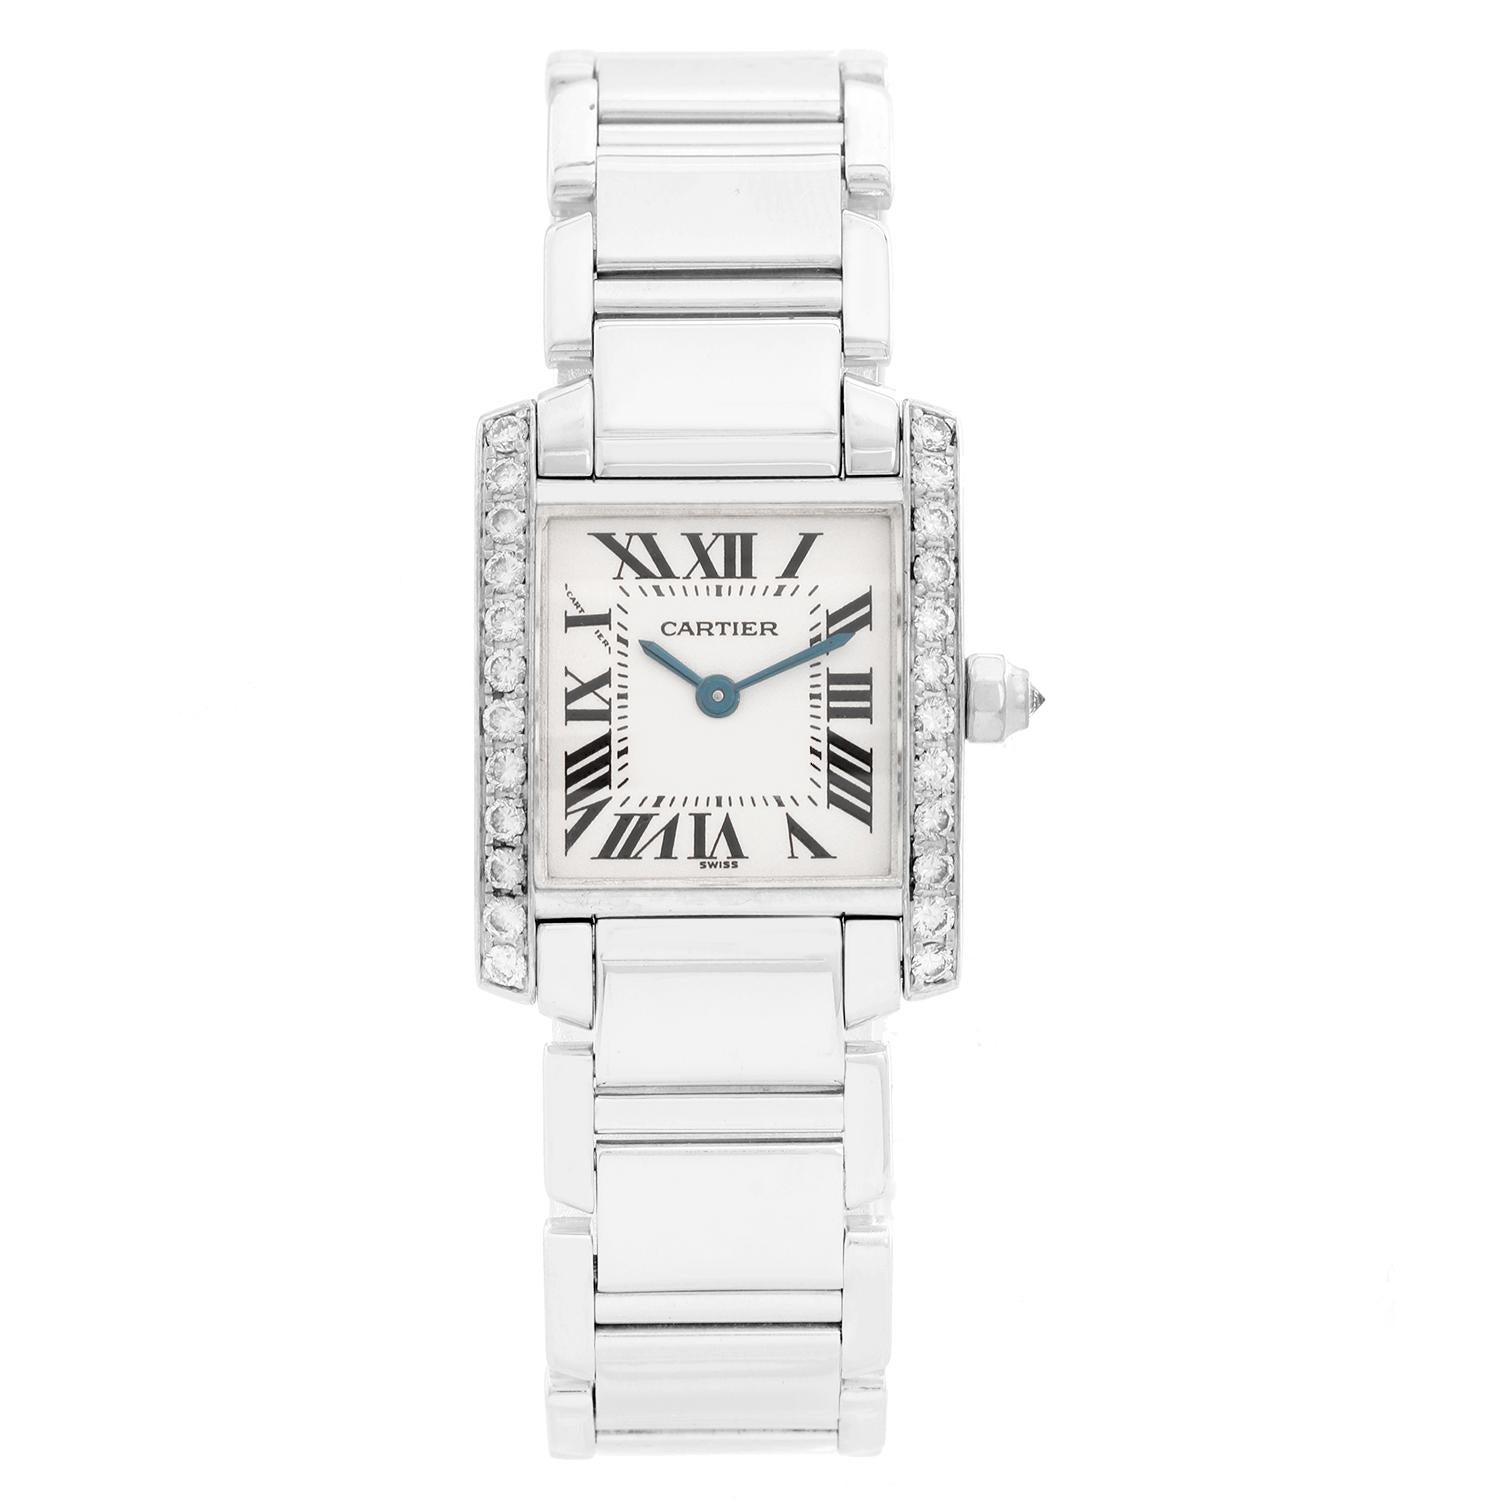 Cartier Tank Francaise 18 Karat White Gold and Diamonds Ladies Watch WE1002S3